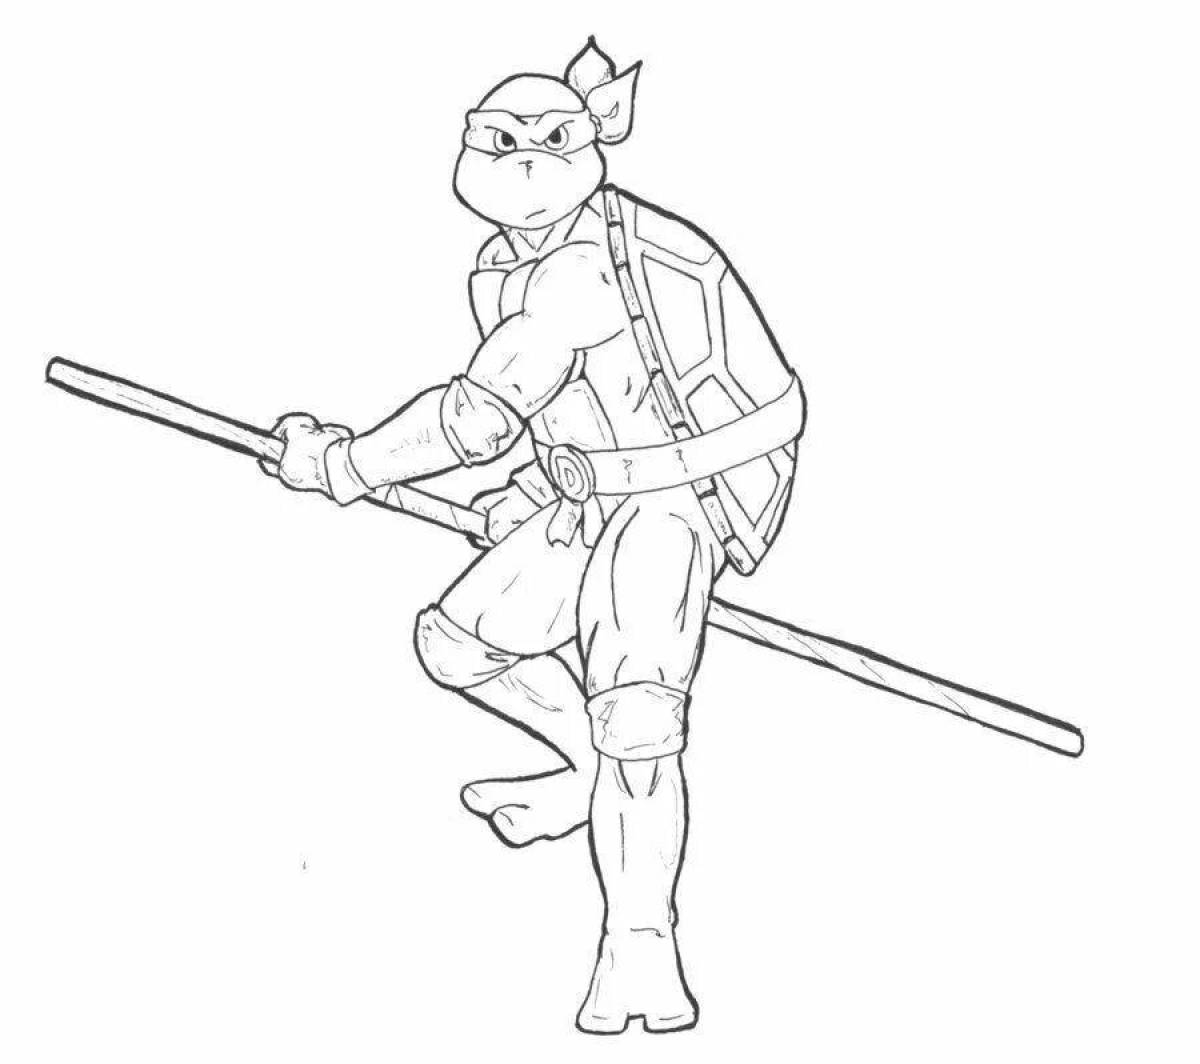 Joyful teenage mutant ninja turtles donatello coloring